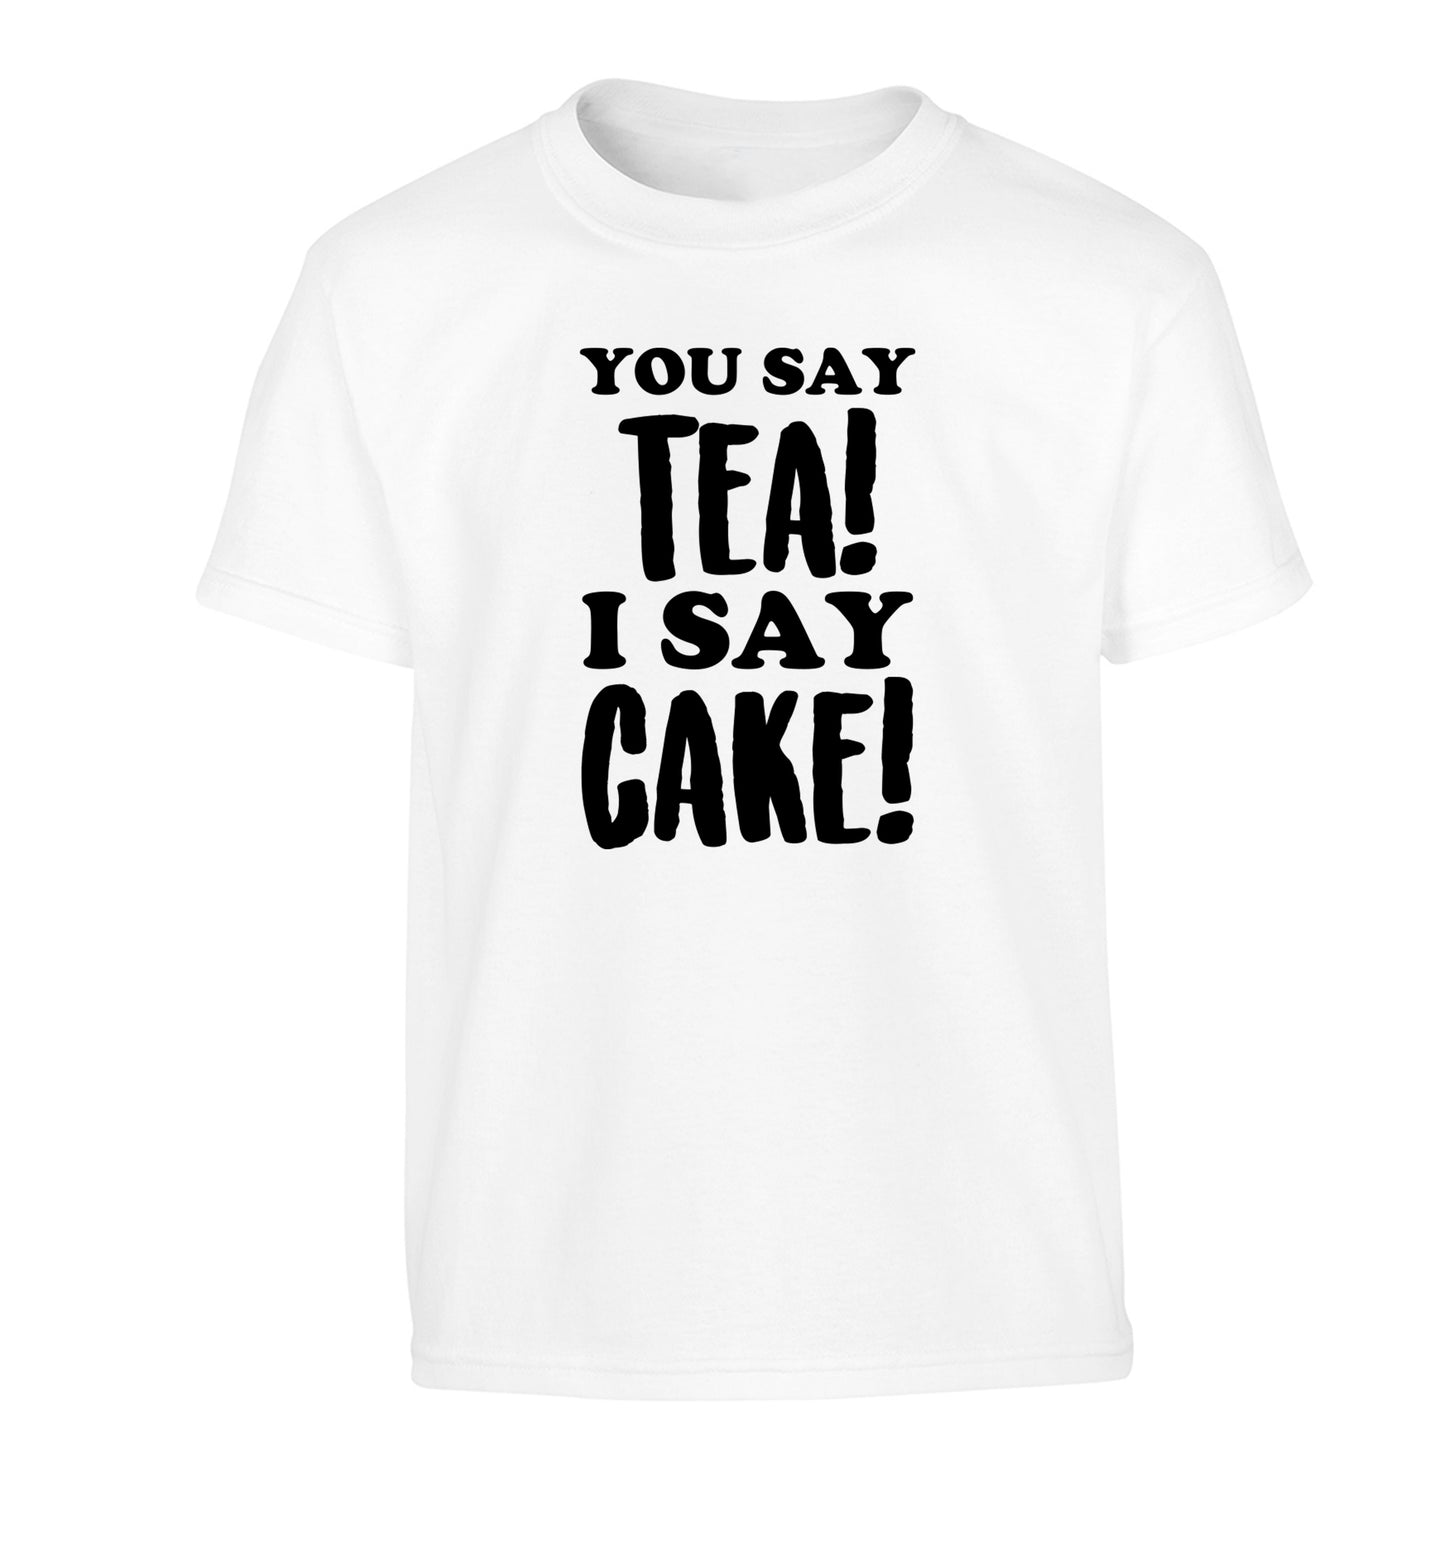 You say tea I say cake! Children's white Tshirt 12-14 Years